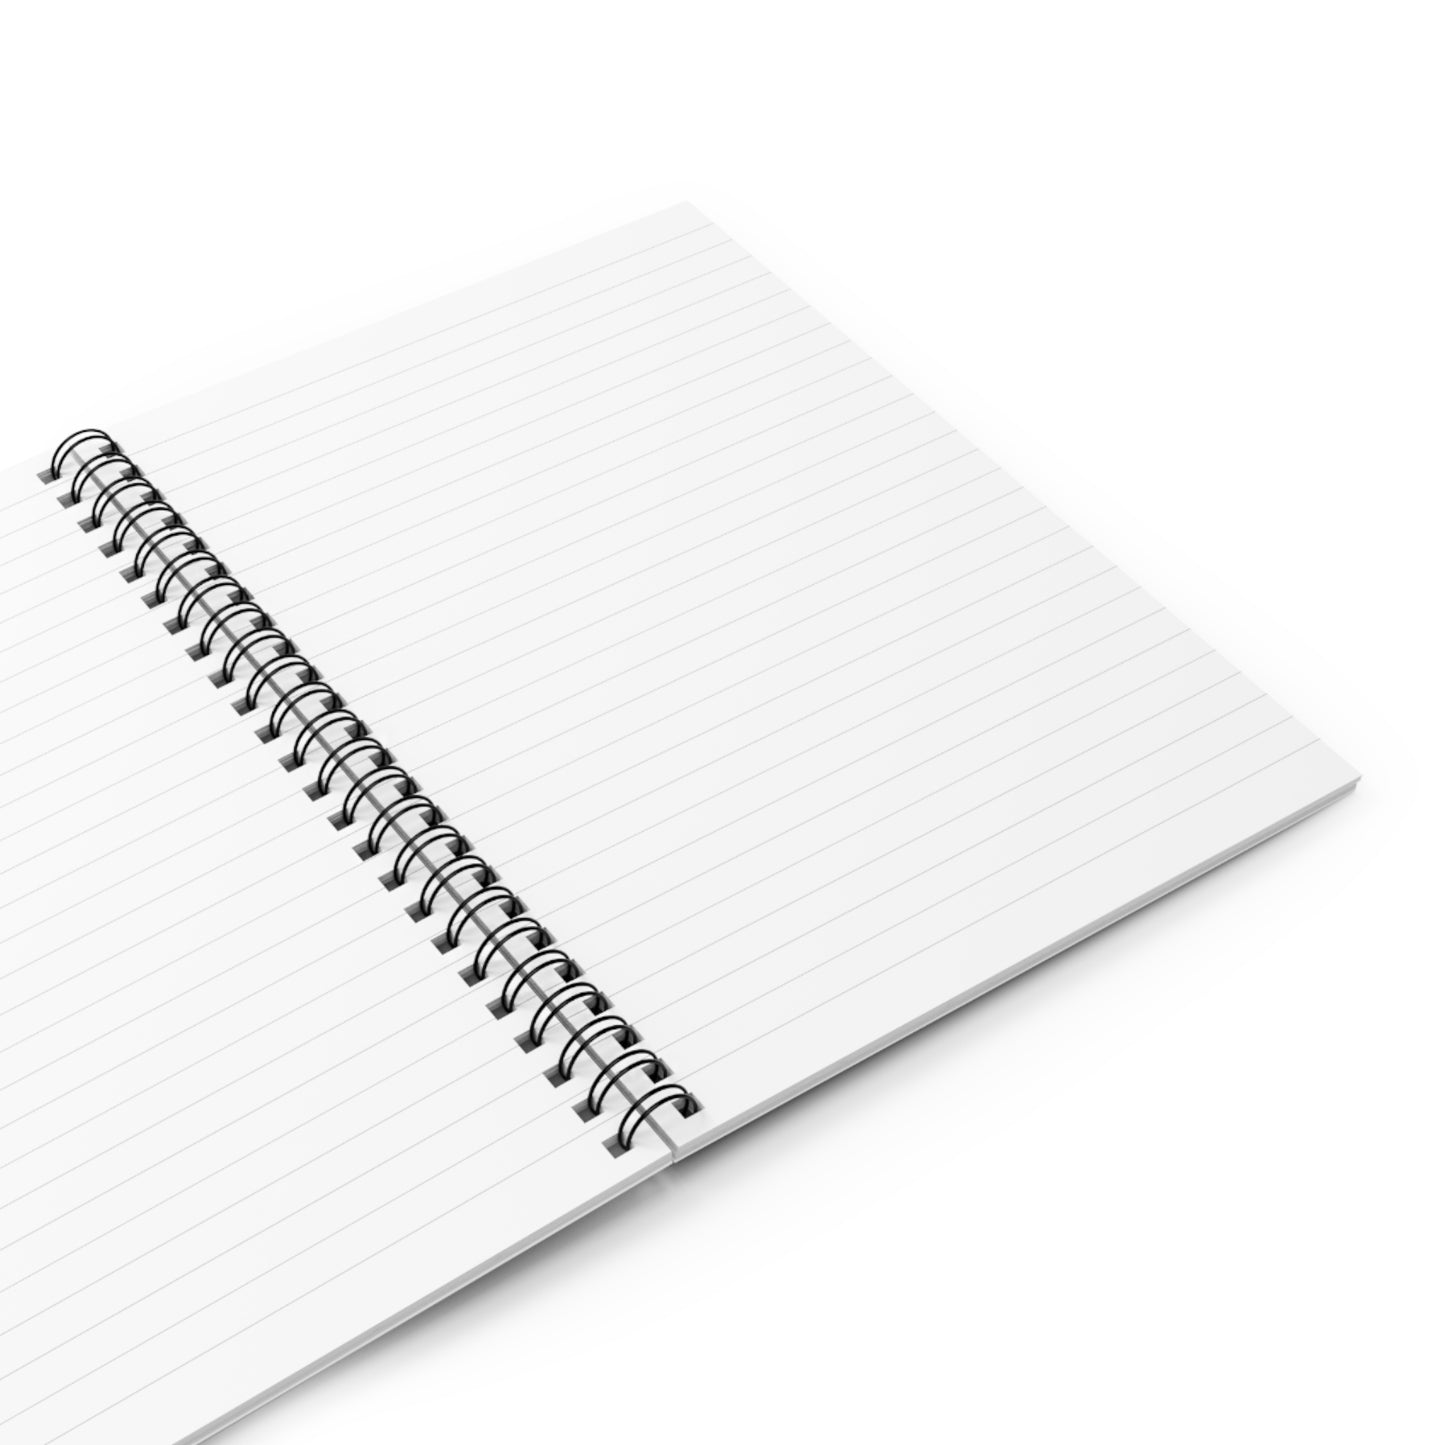 Dream Spiral Notebook - Ruled Line